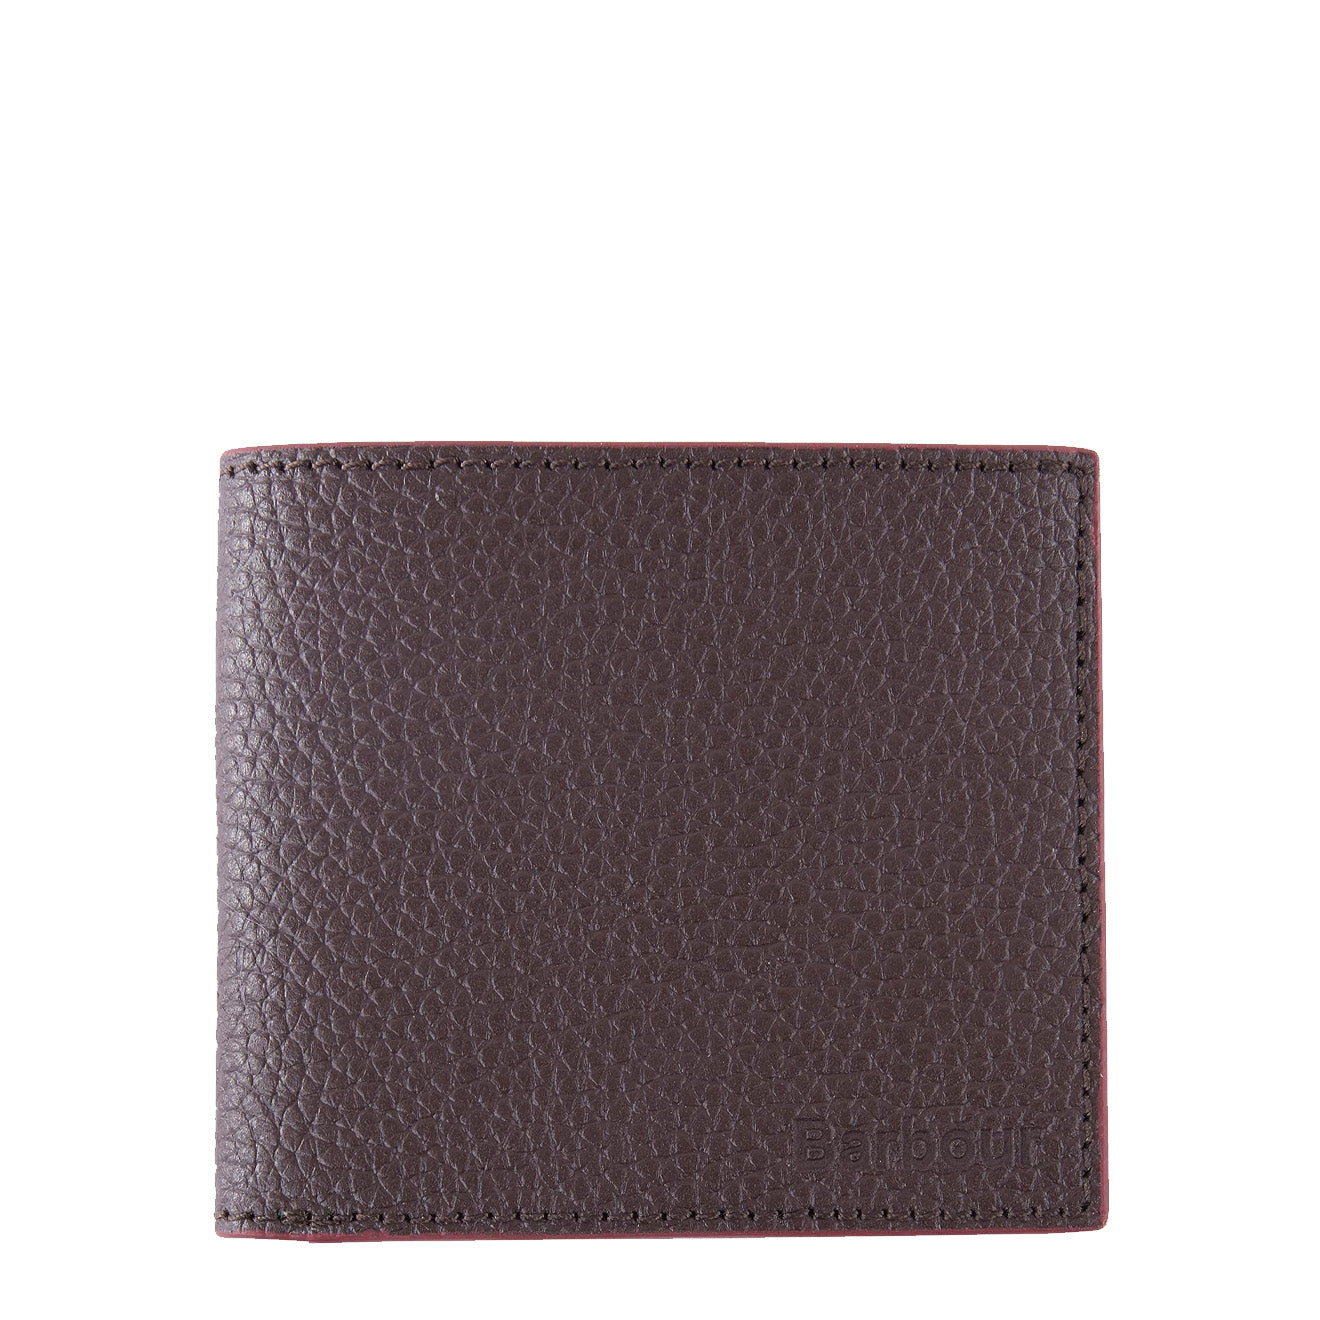 Barbour Grain Leather Billfold Wallet Dark Brown | The Sporting Lodge